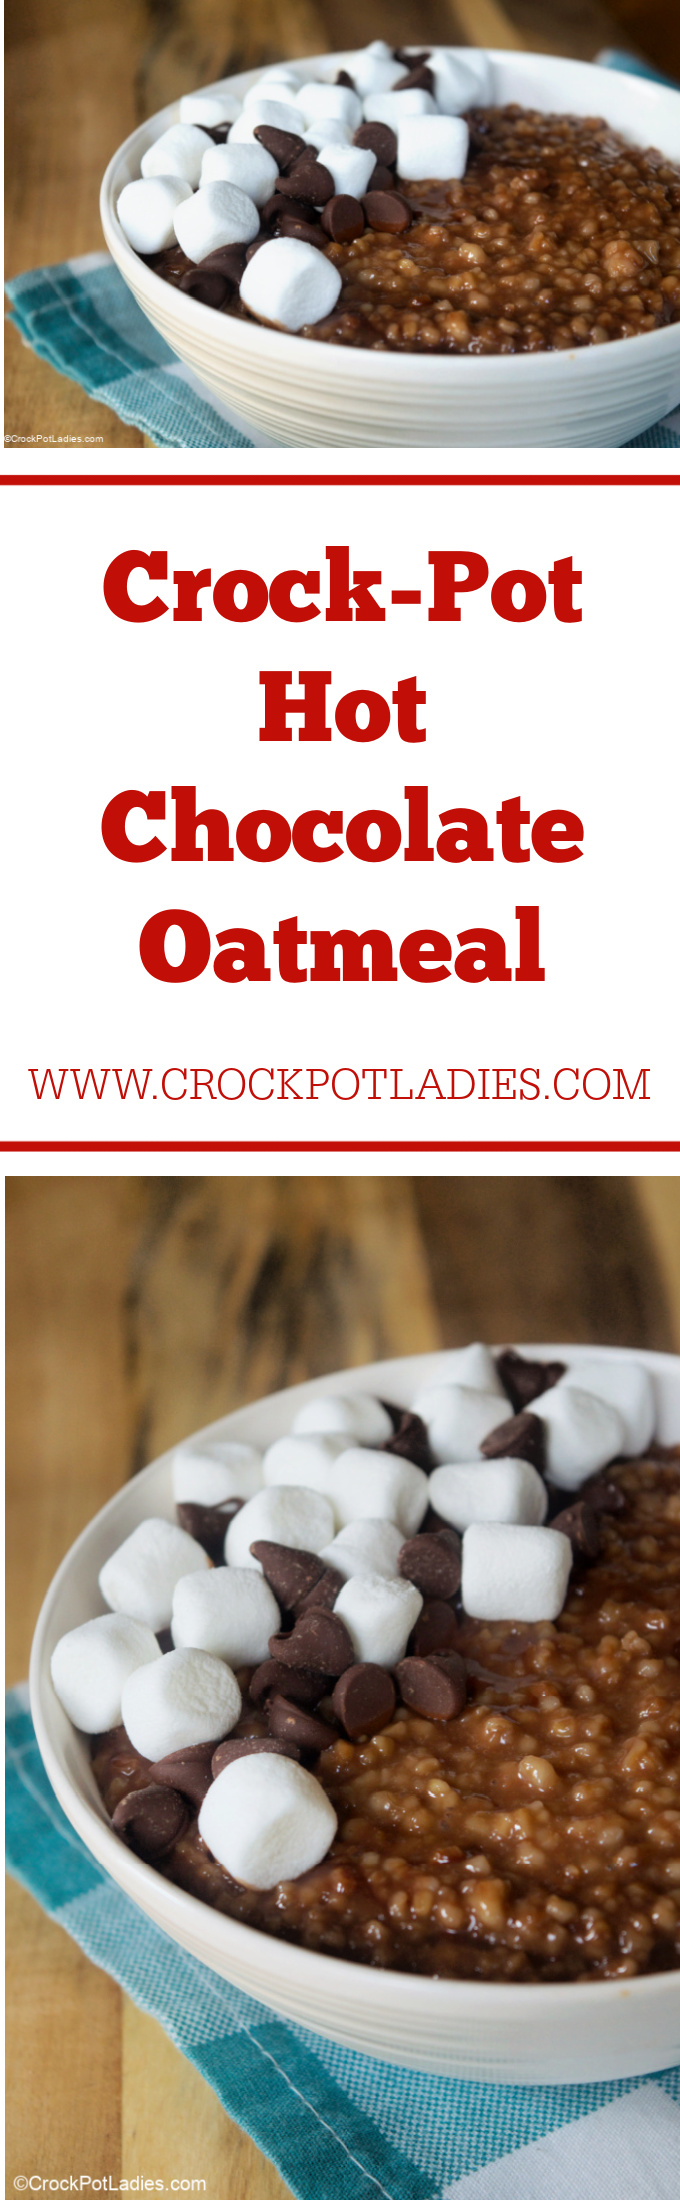 Crock-Pot Hot Chocolate Oatmeal